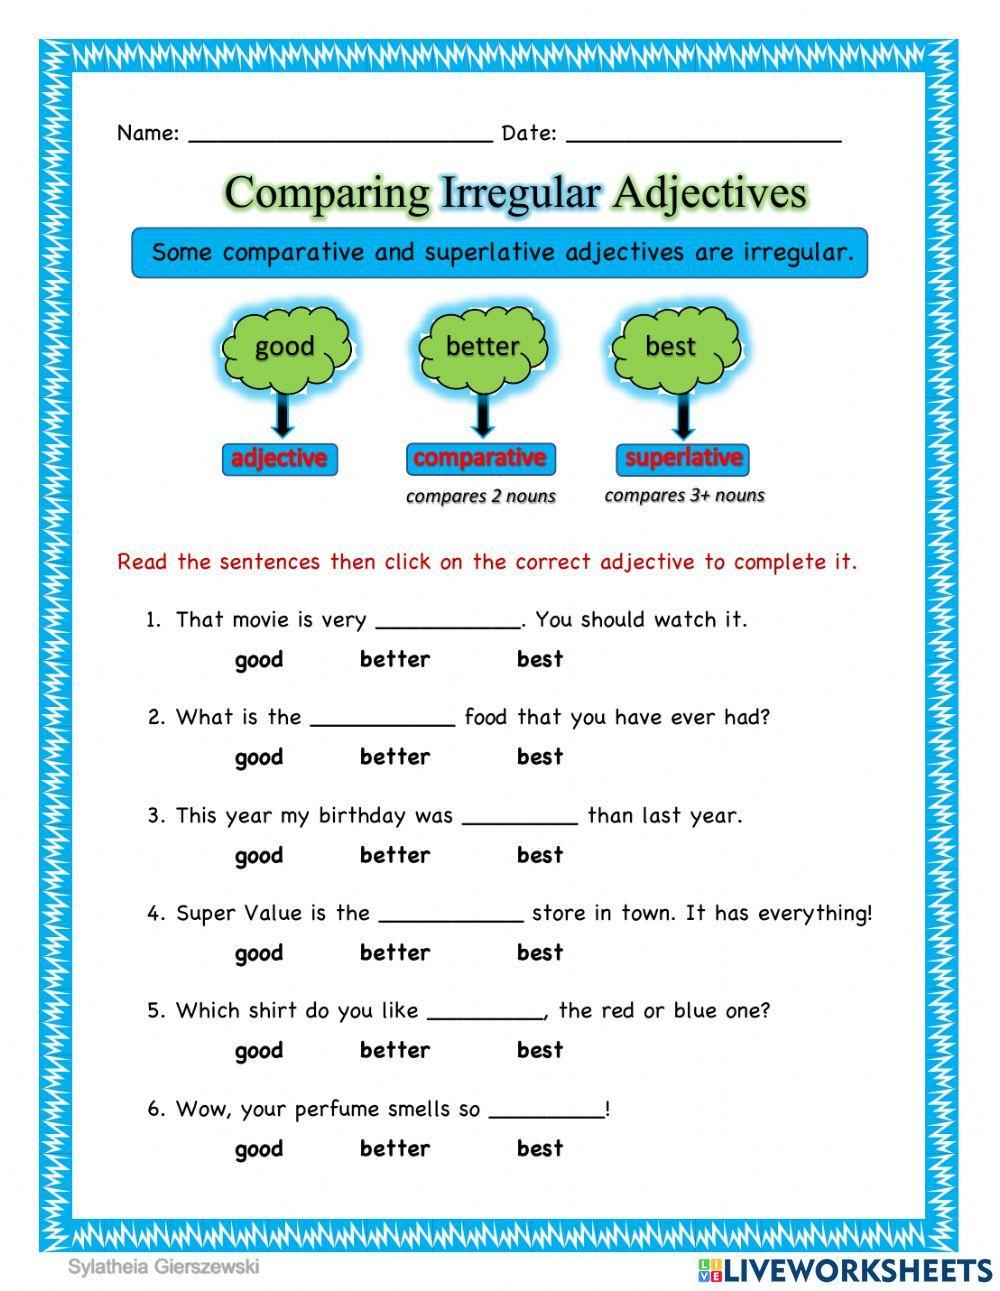 Comparing Irregular Adjectives